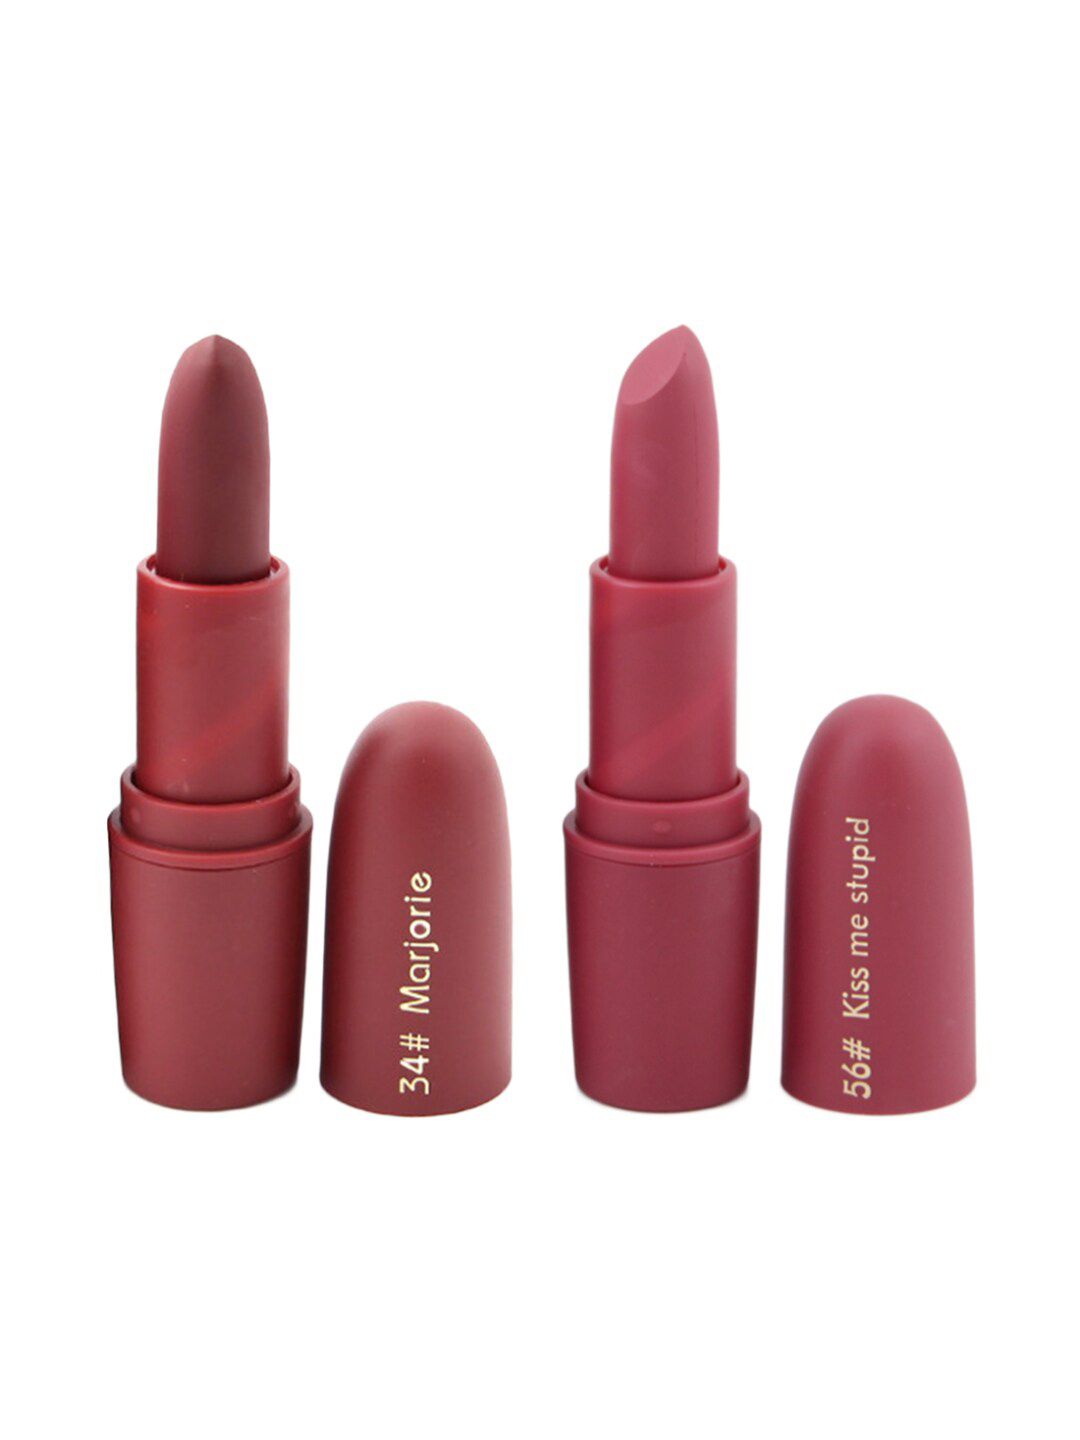 MISS ROSE Set of 2 Matte Creamy Lipsticks - Marjorie 34 & Kiss Me Stupid 56 Price in India